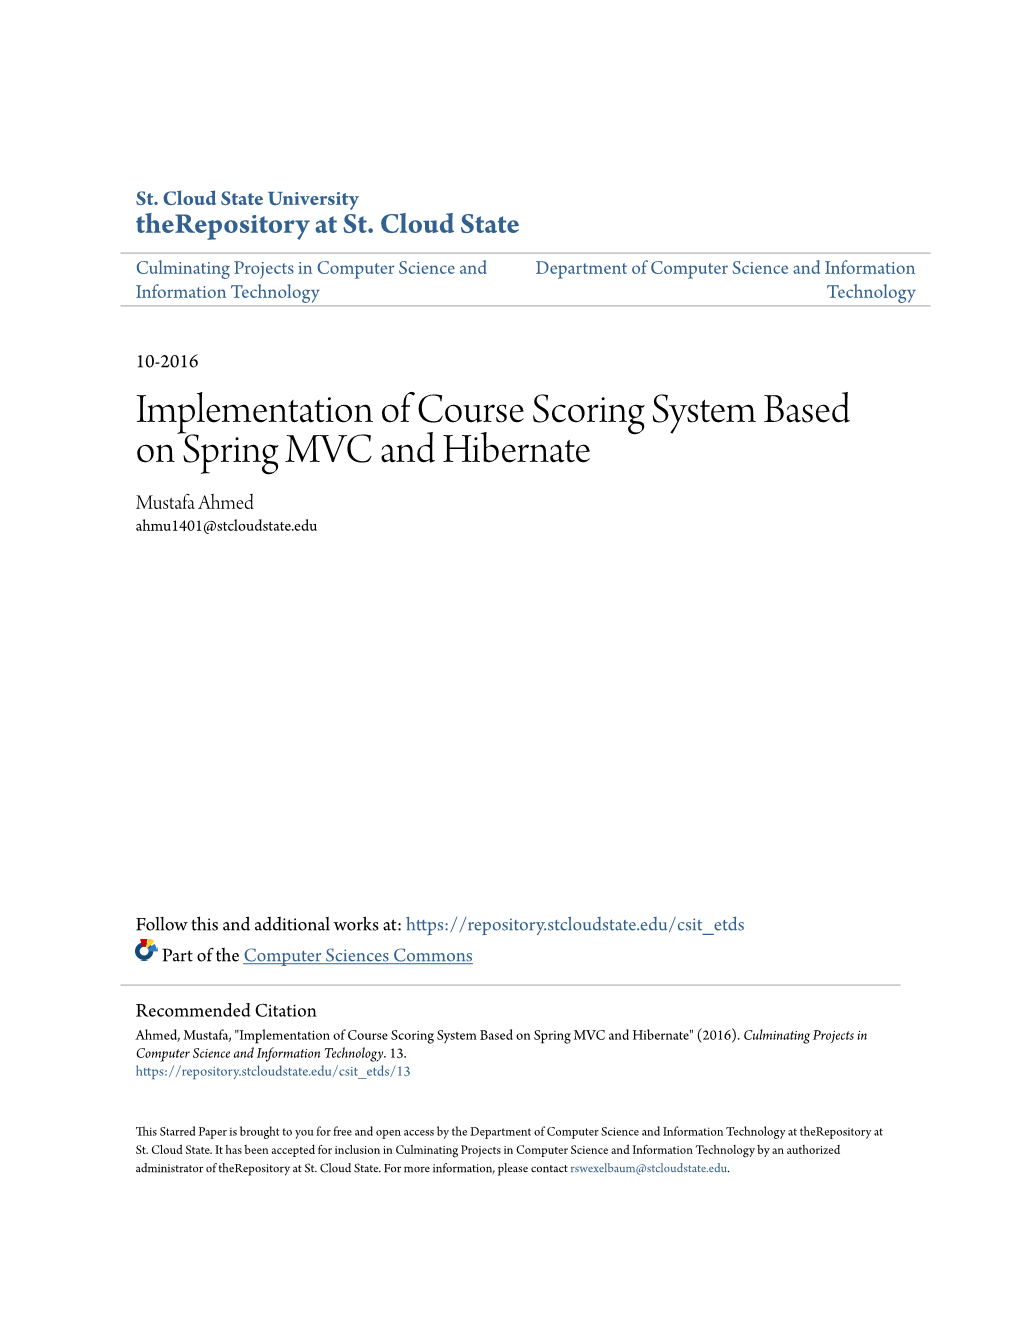 Implementation of Course Scoring System Based on Spring MVC and Hibernate Mustafa Ahmed Ahmu1401@Stcloudstate.Edu